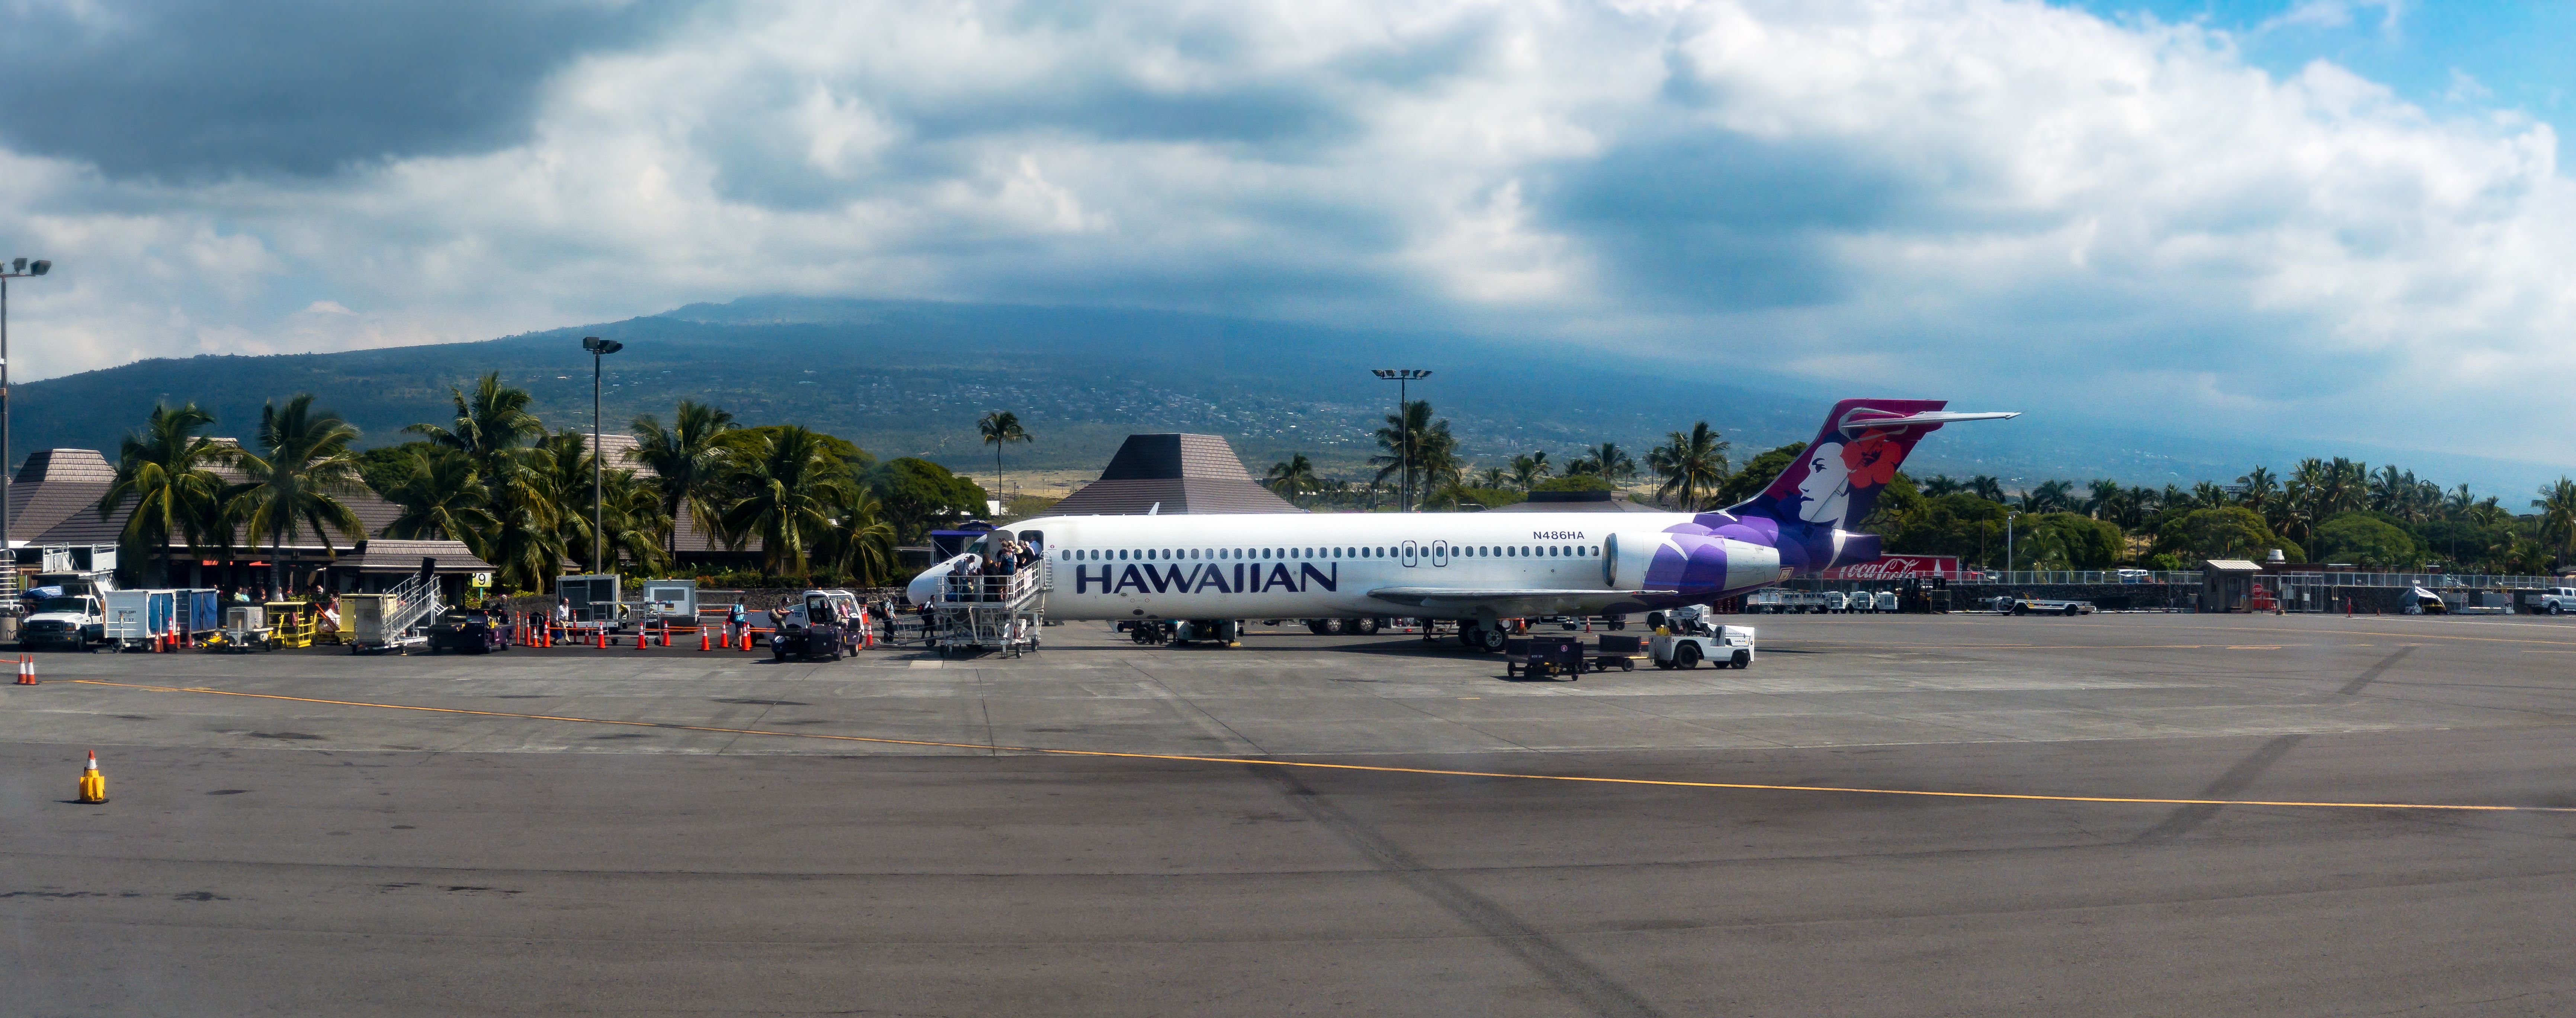 Hawaiian Airlines Boeing 717-200 at Kona International Airport.